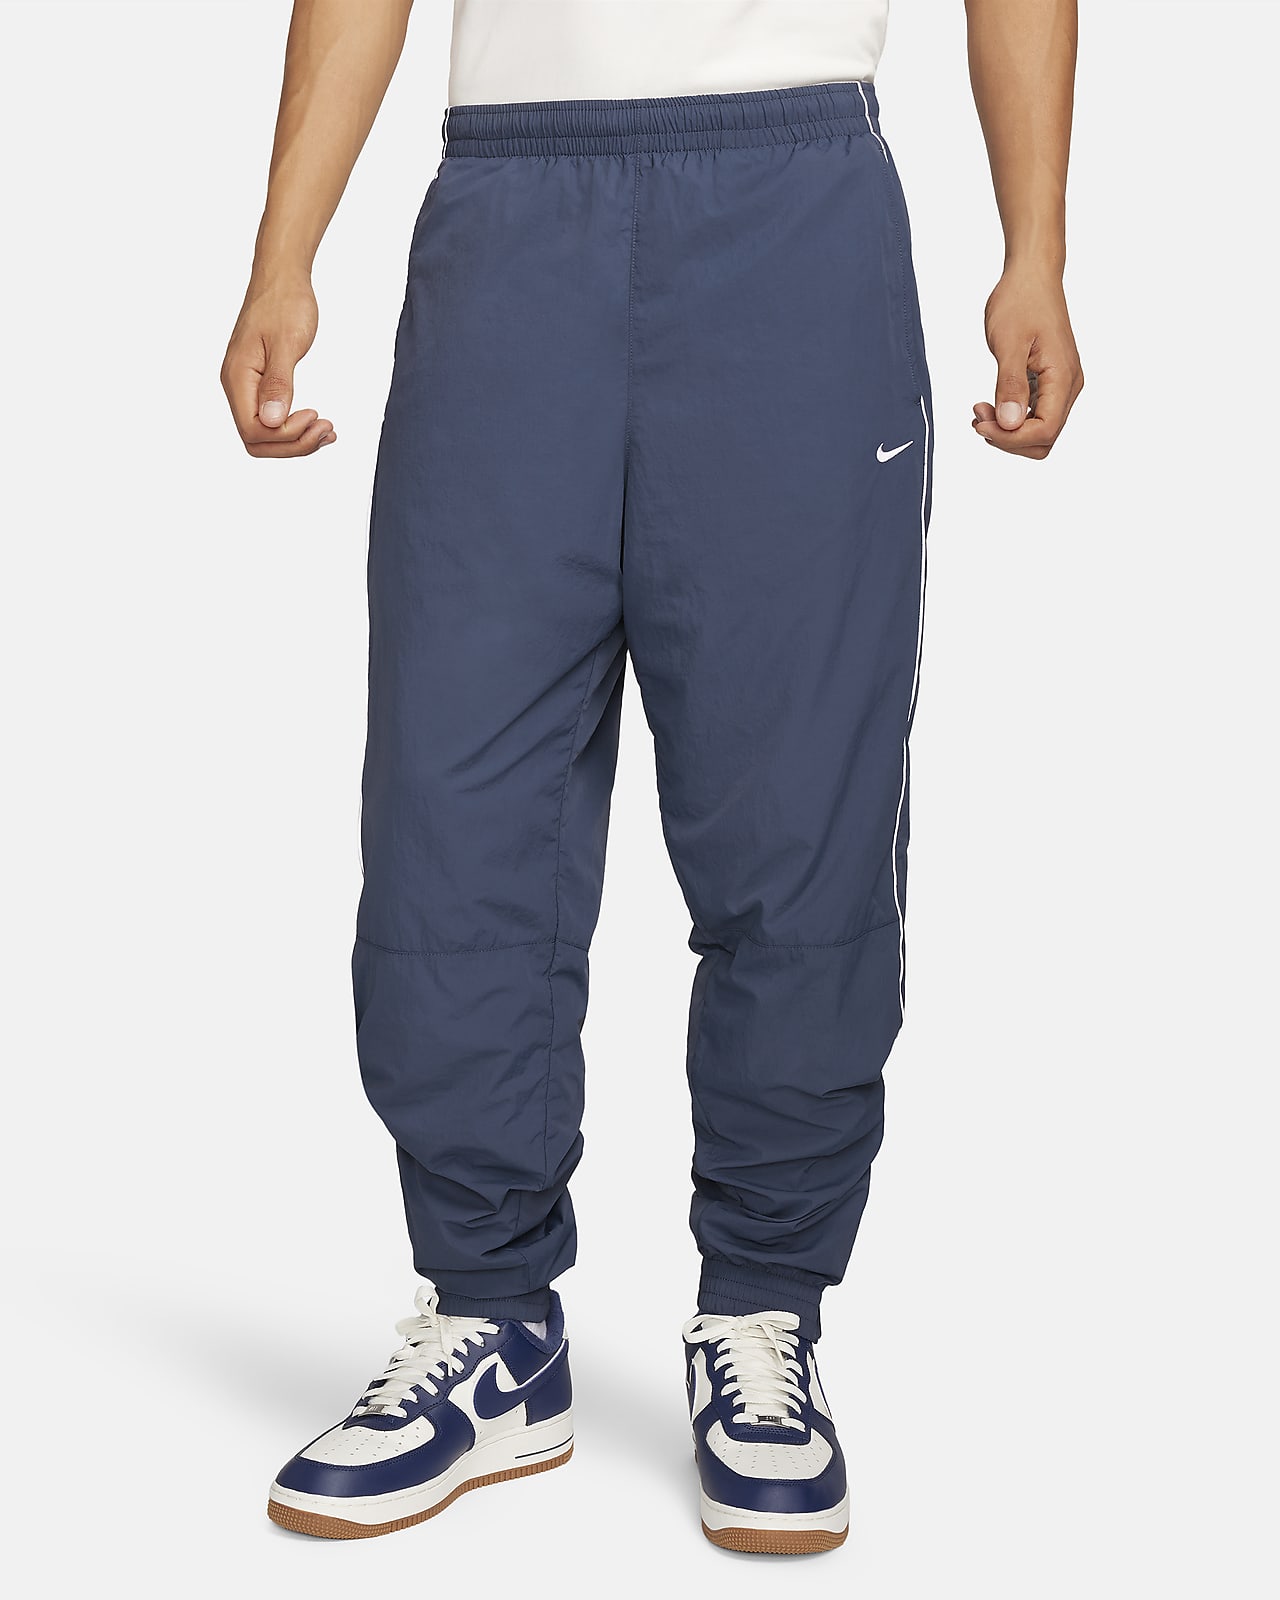 Nike Mens' Regular Track Pants (932258-010_Black/White_s) : Amazon.in:  Fashion